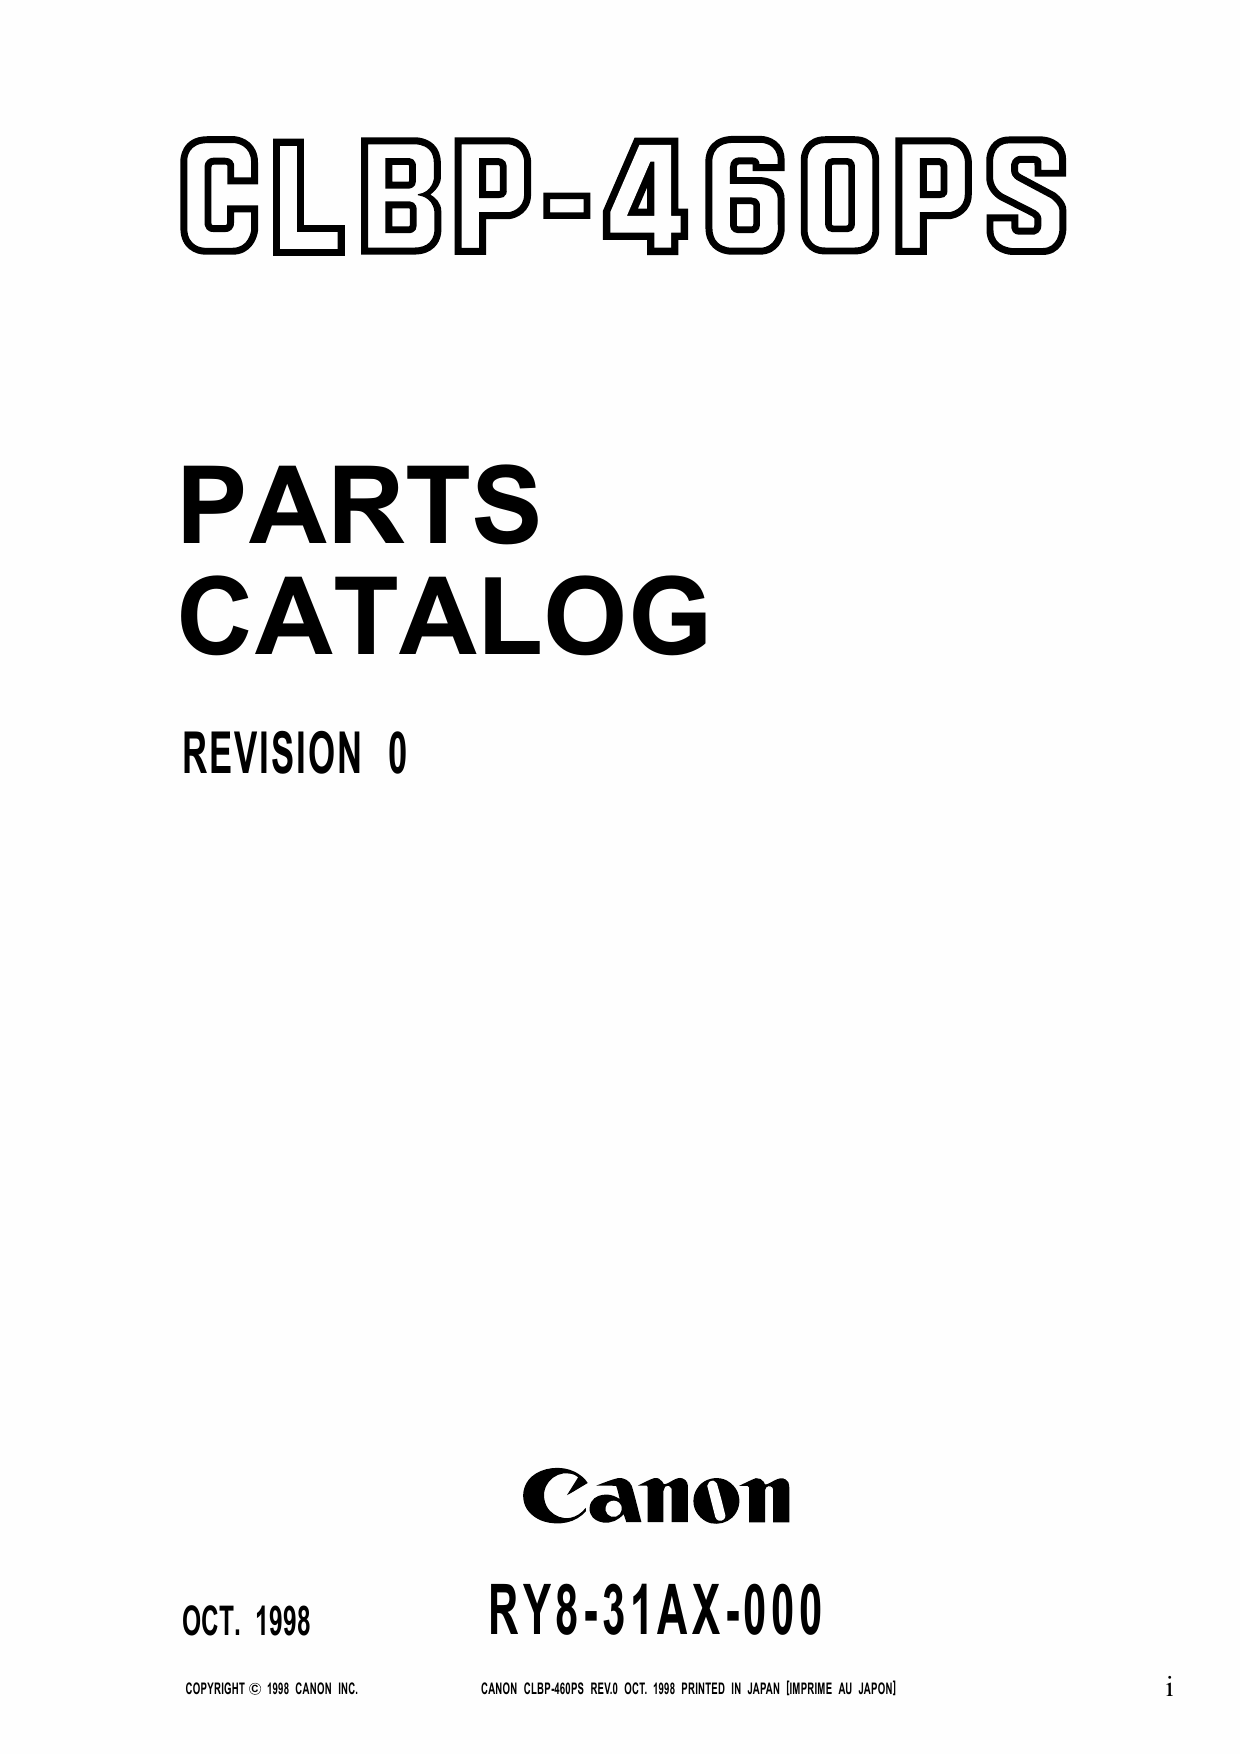 Canon imageCLASS CLBP-460 Parts Catalog Manual-1